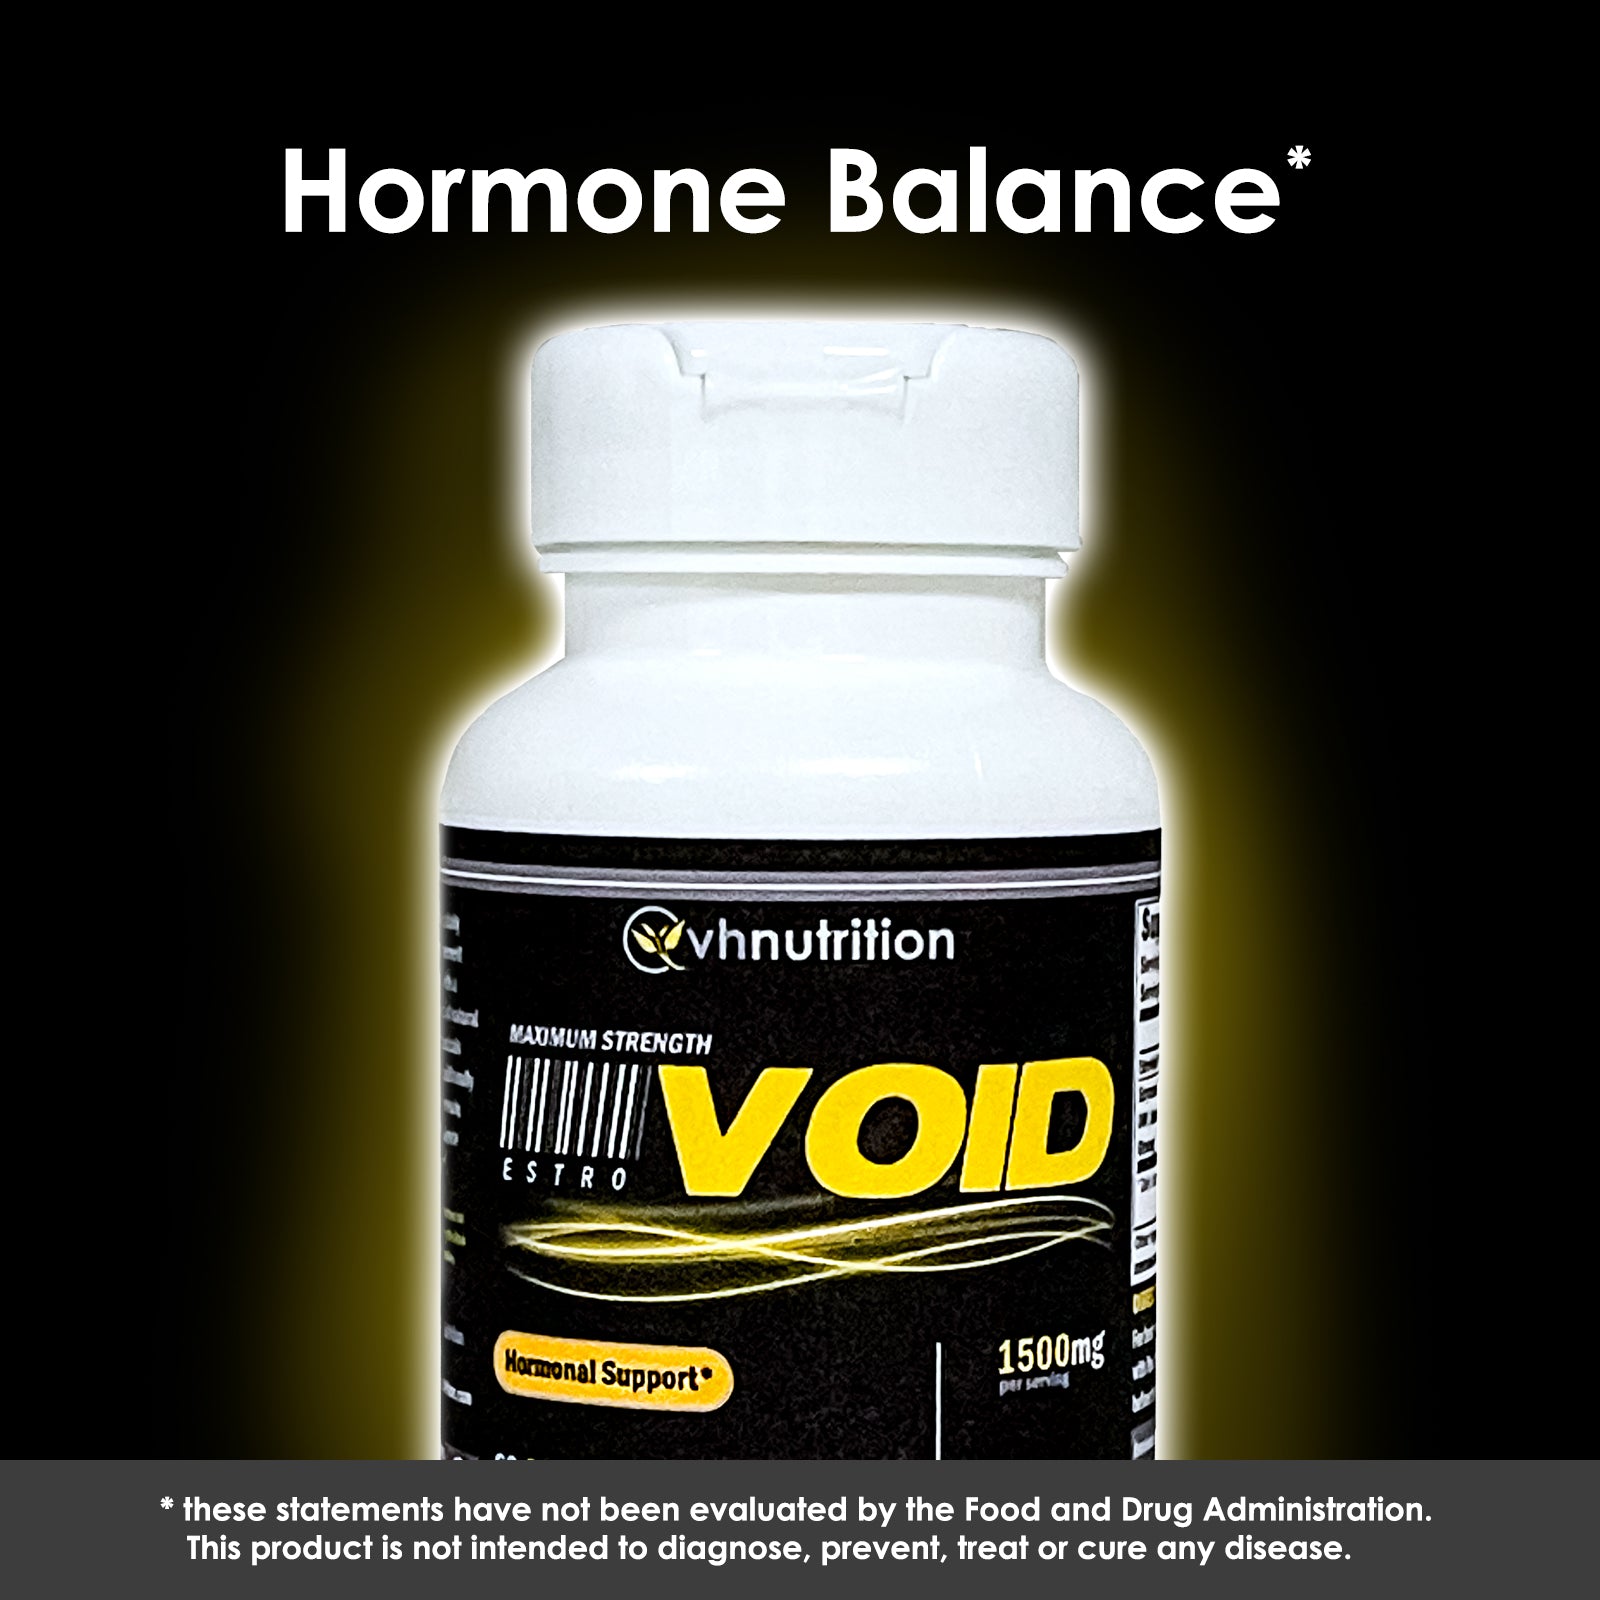 VH Nutrition EstroVoid | Estrogen Blocker & Natural Aromatase Inhibitor for Men | 1500mg Proprietary Formula | 60 Capsules